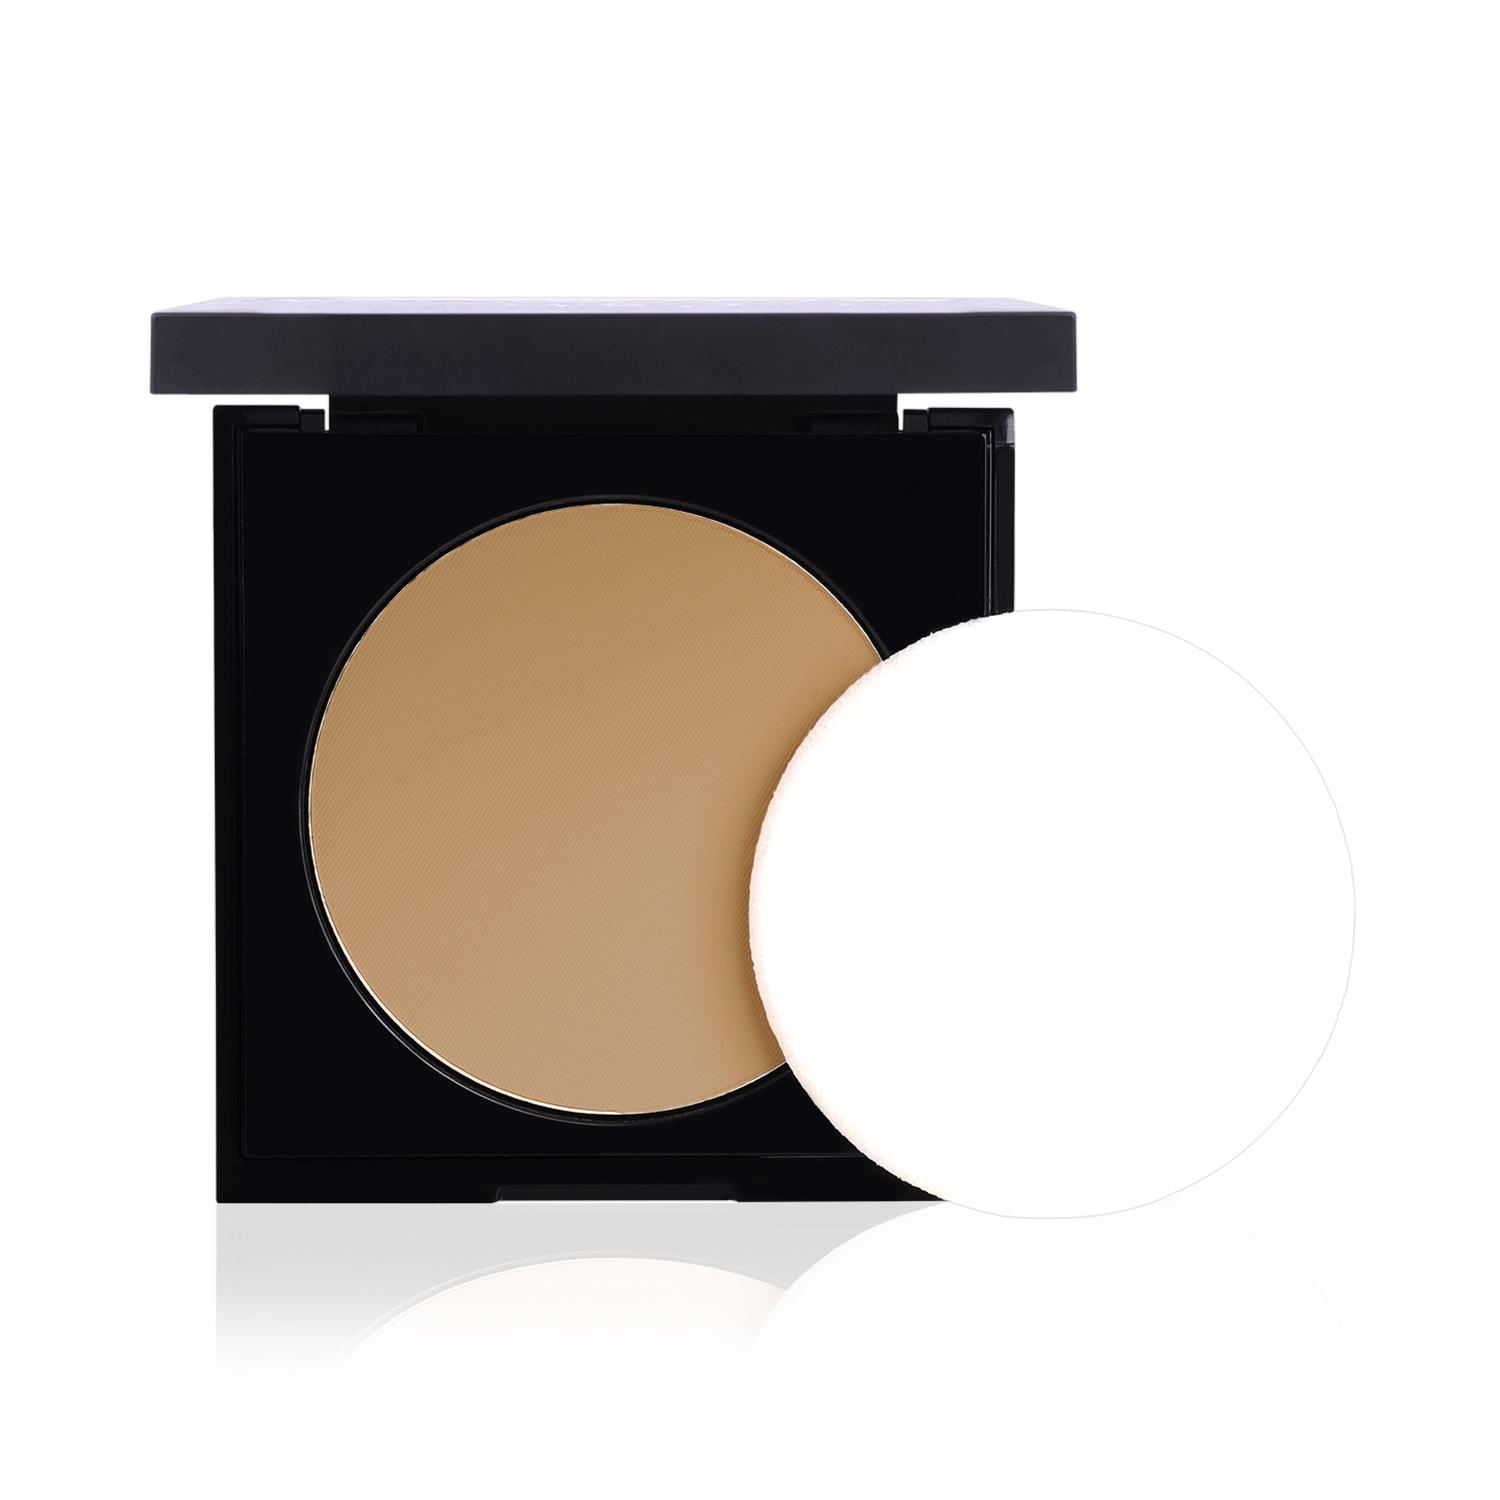 PAC | PAC Spotlight Compact Powder - 08 Honey Dew (8g)